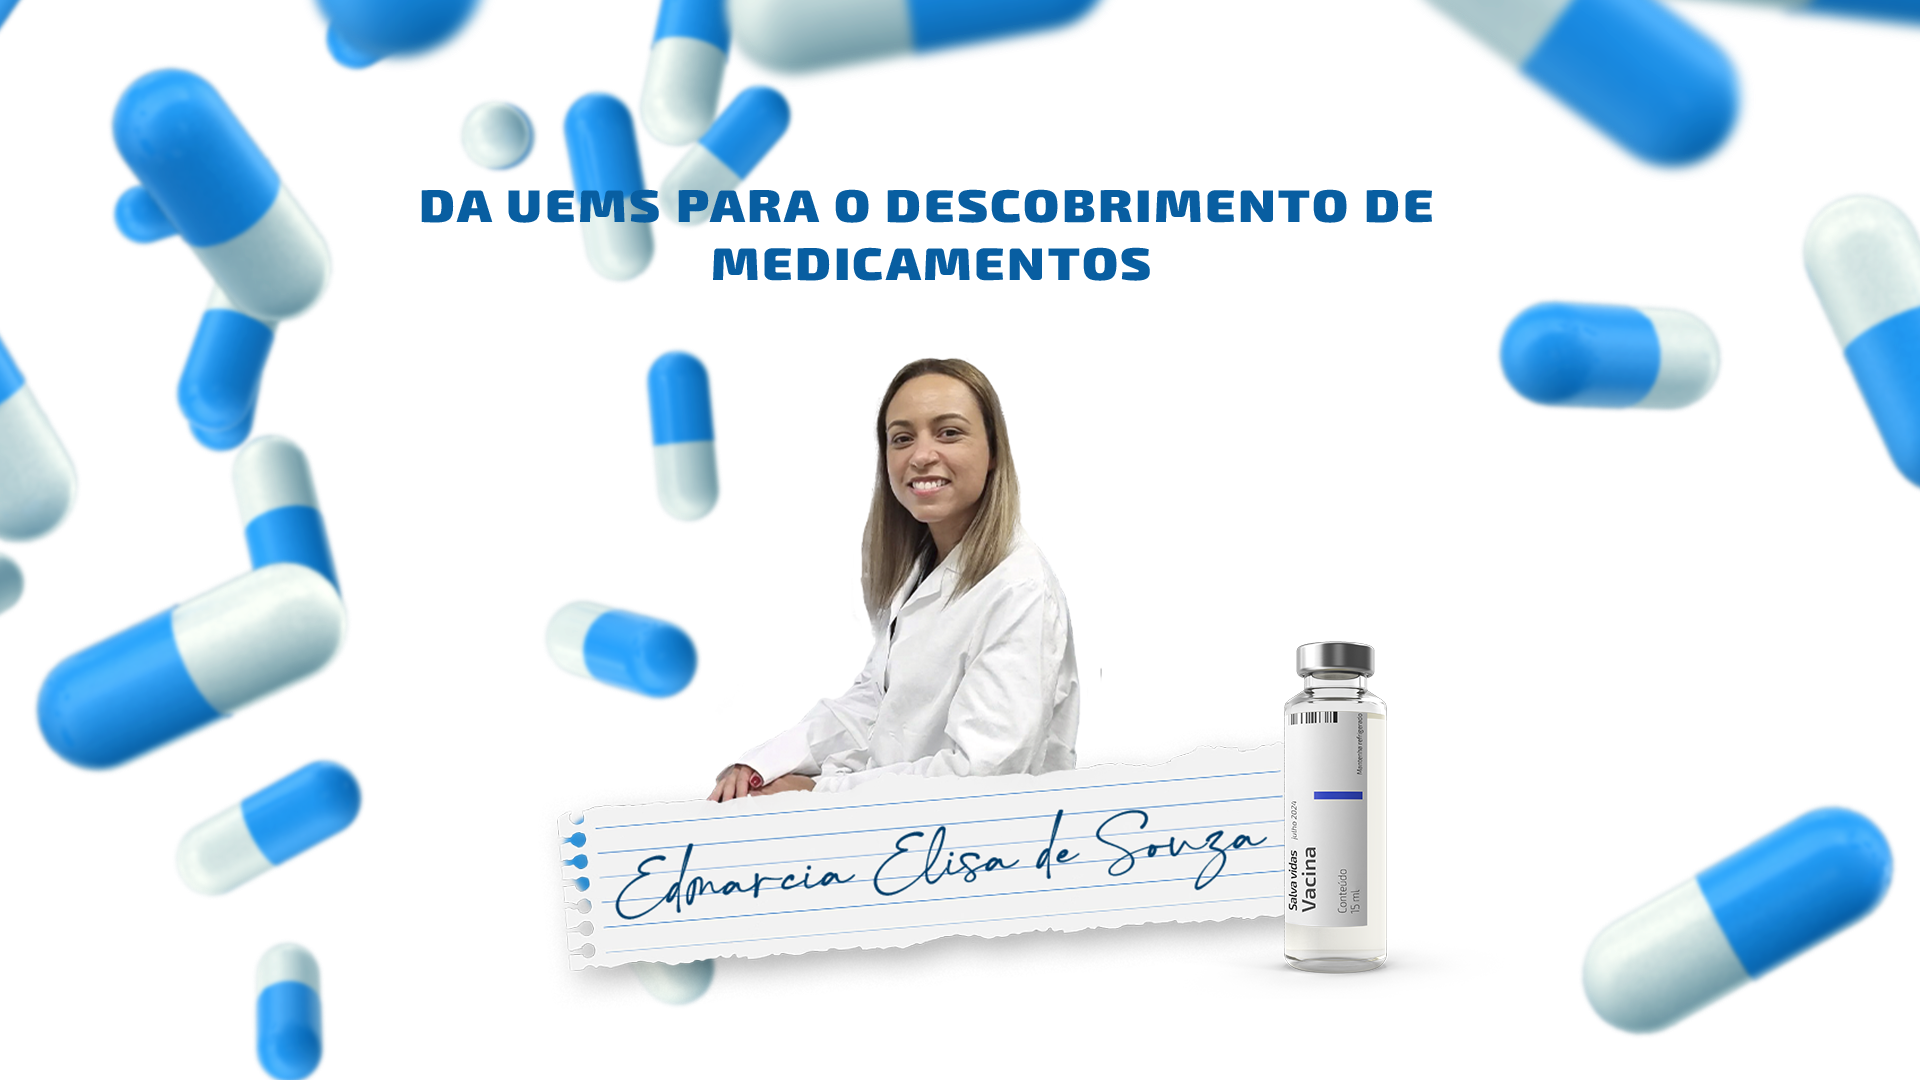 Edmarcia Elisa de Souza